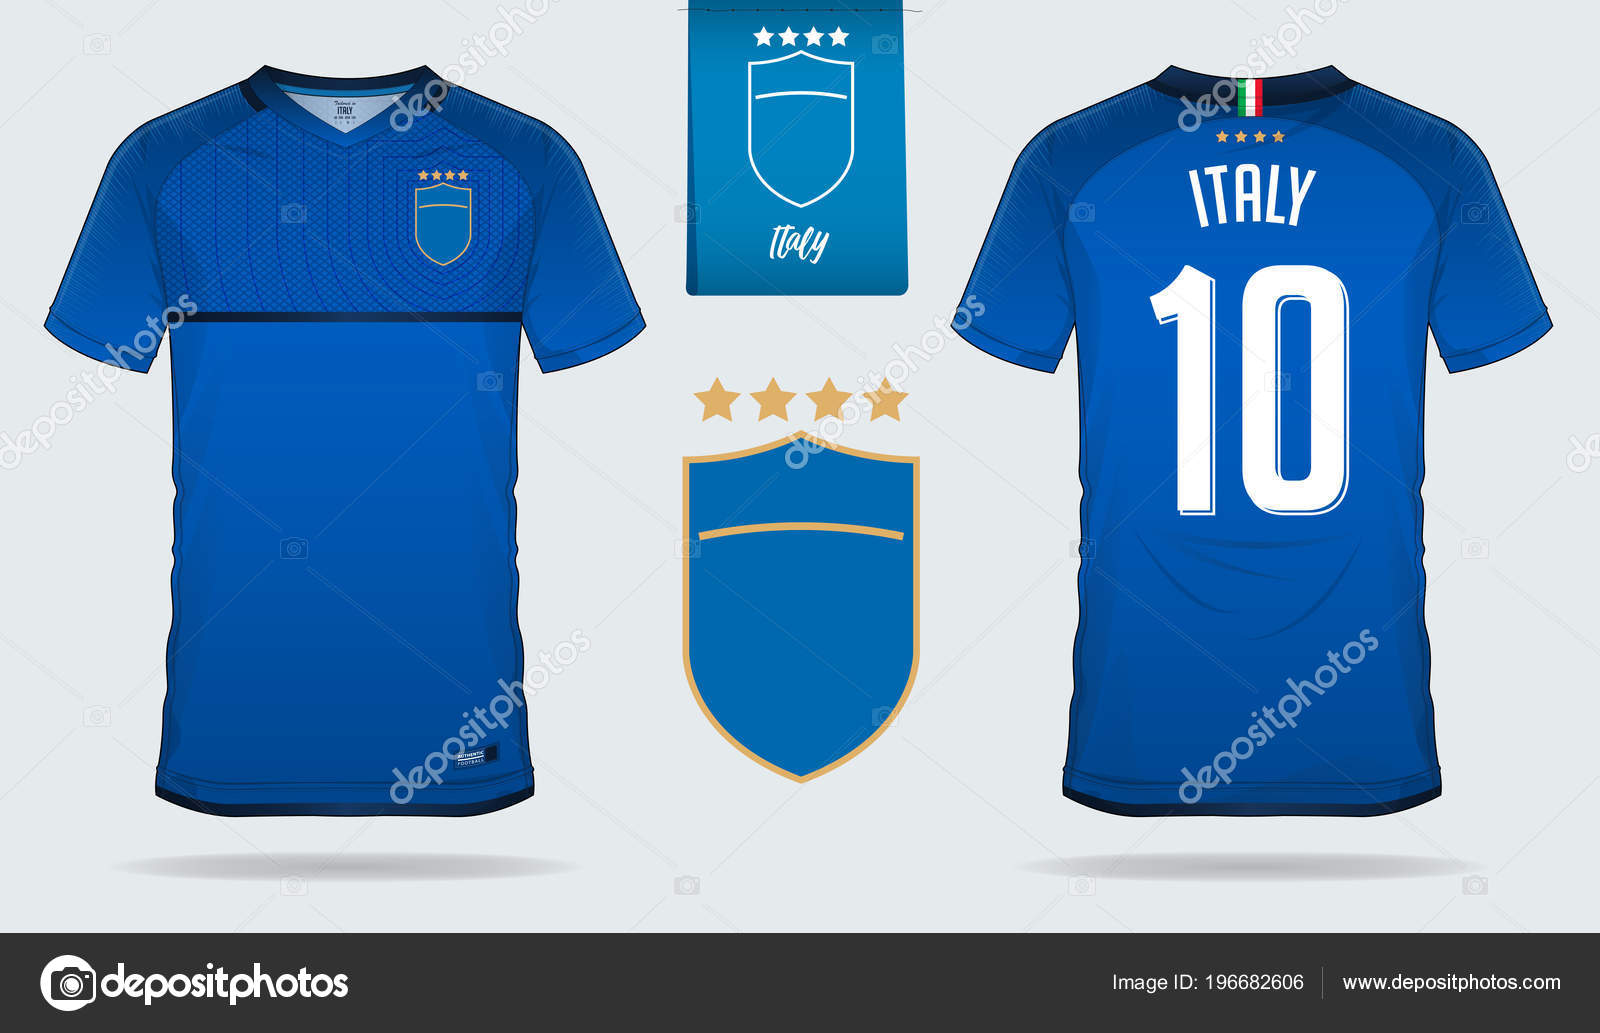 italy football team jersey